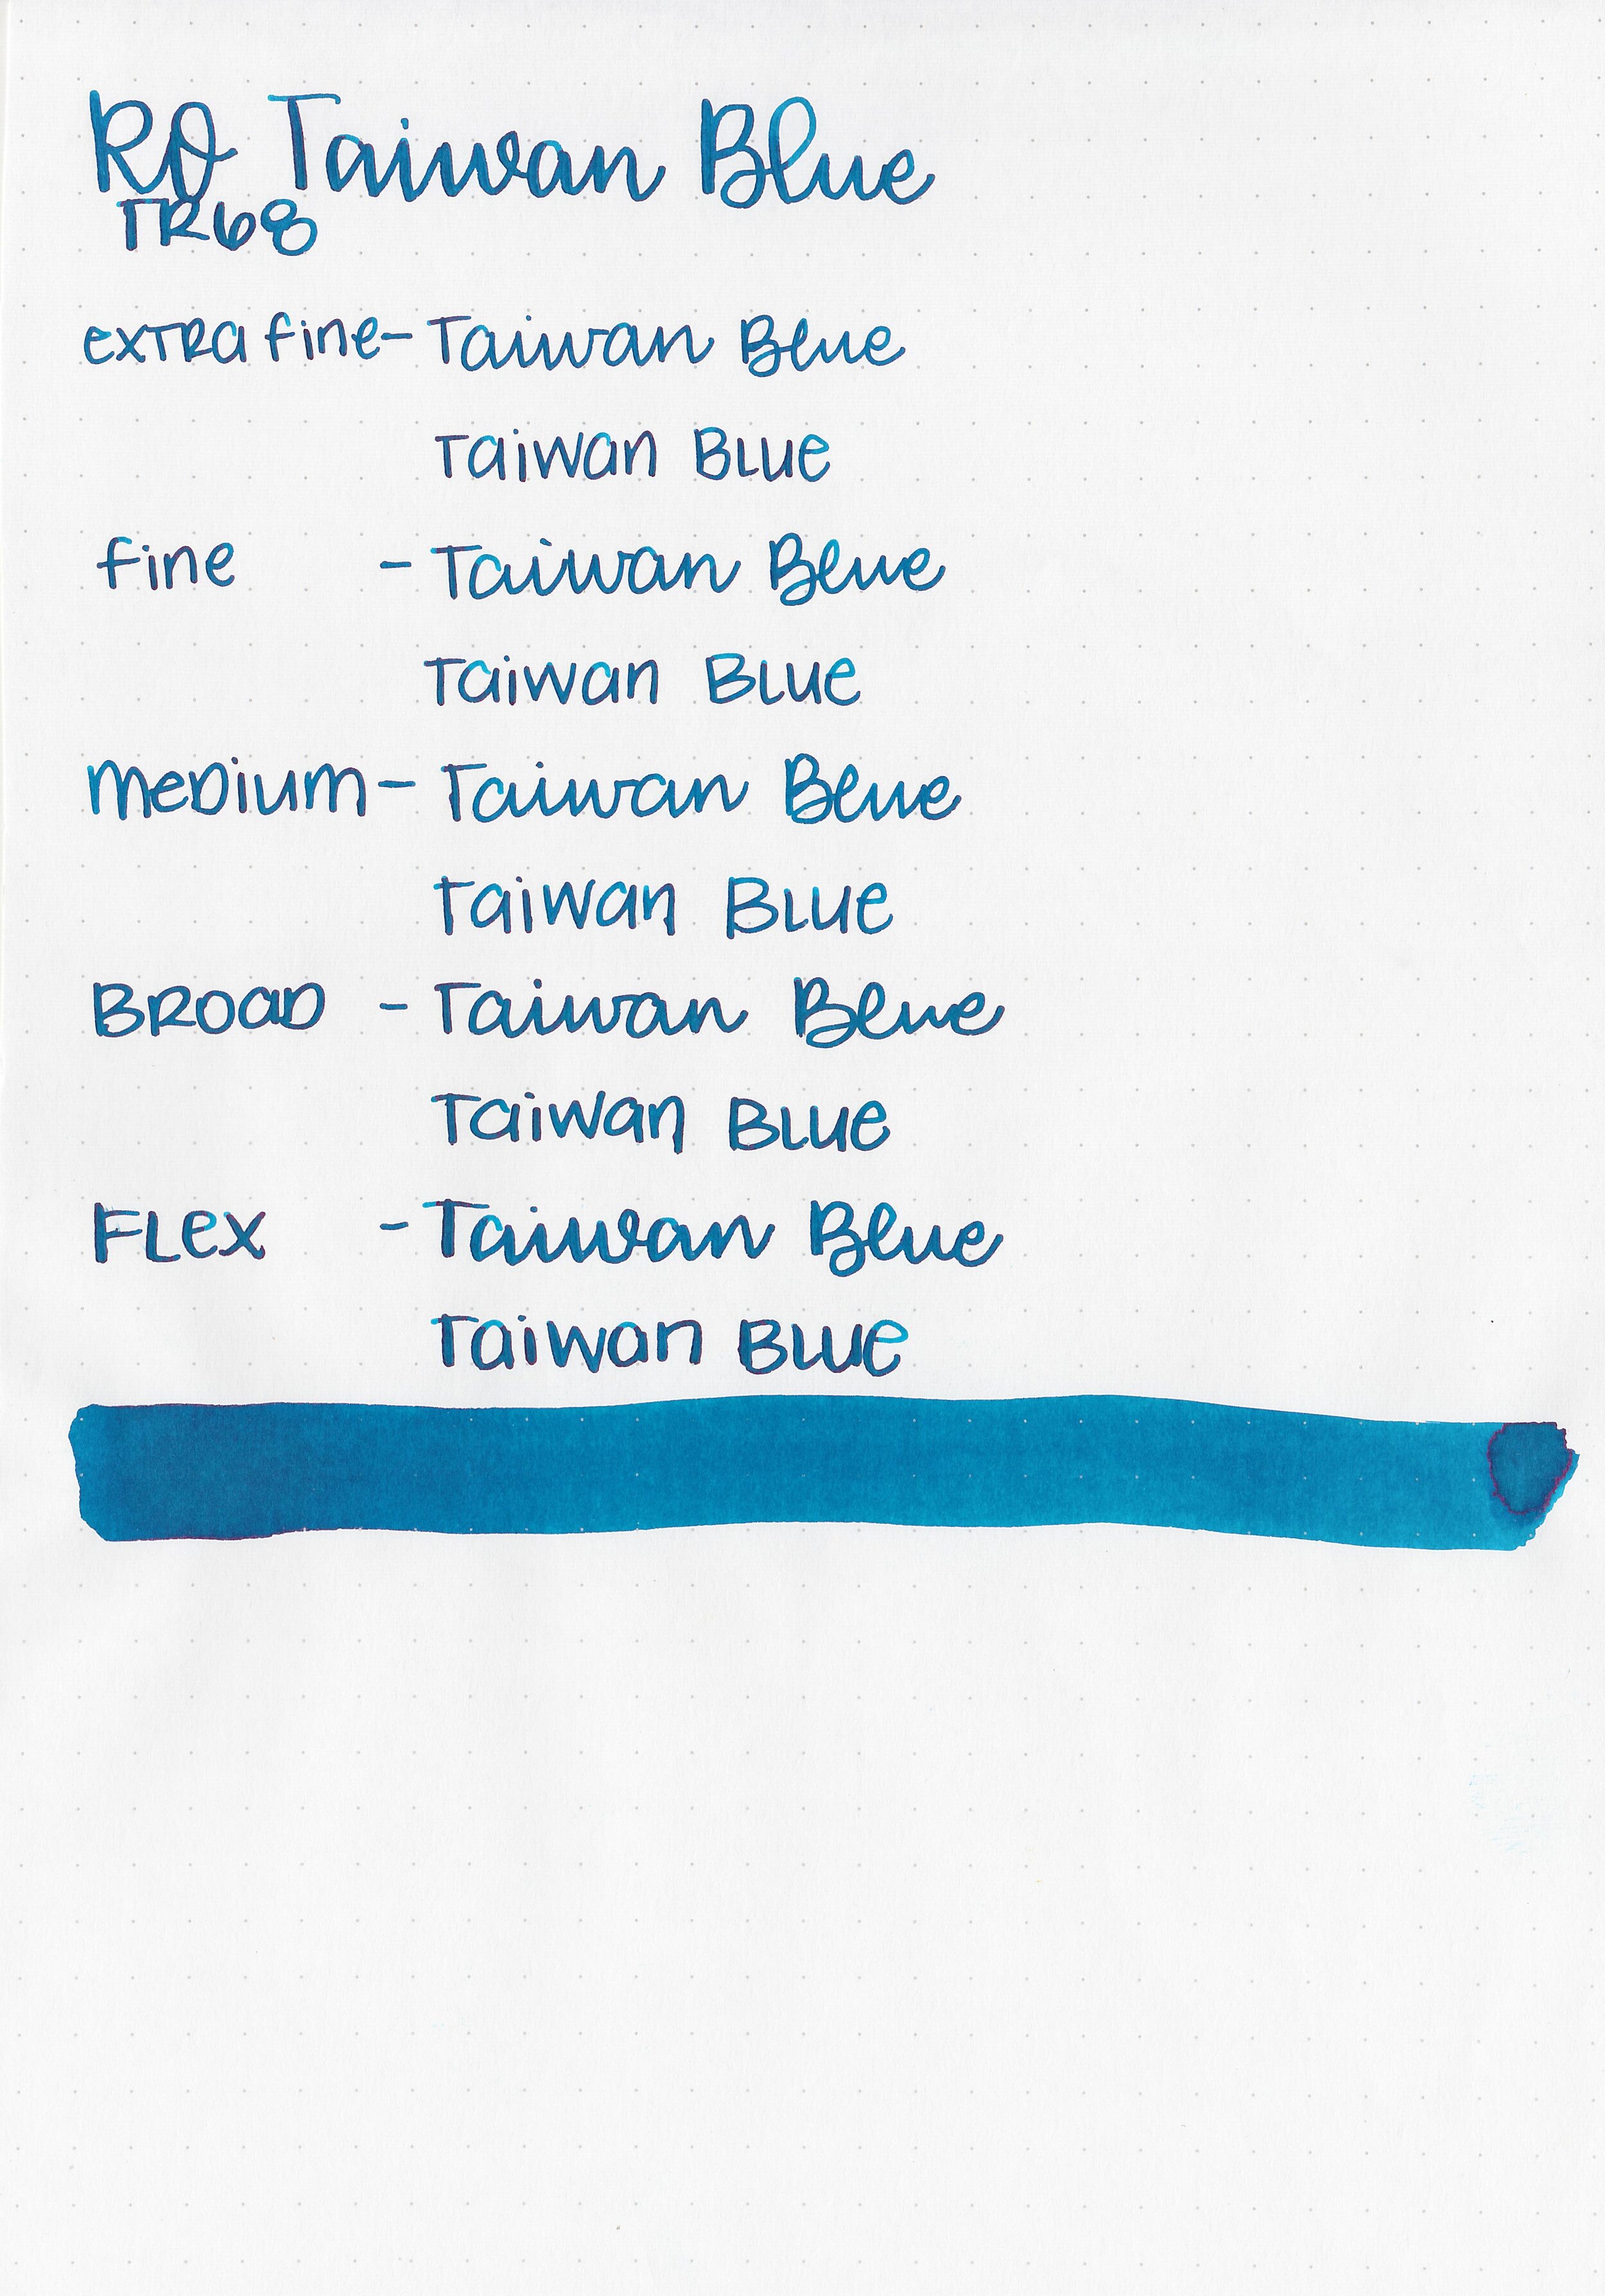 ro-taiwan-blue-2.jpg